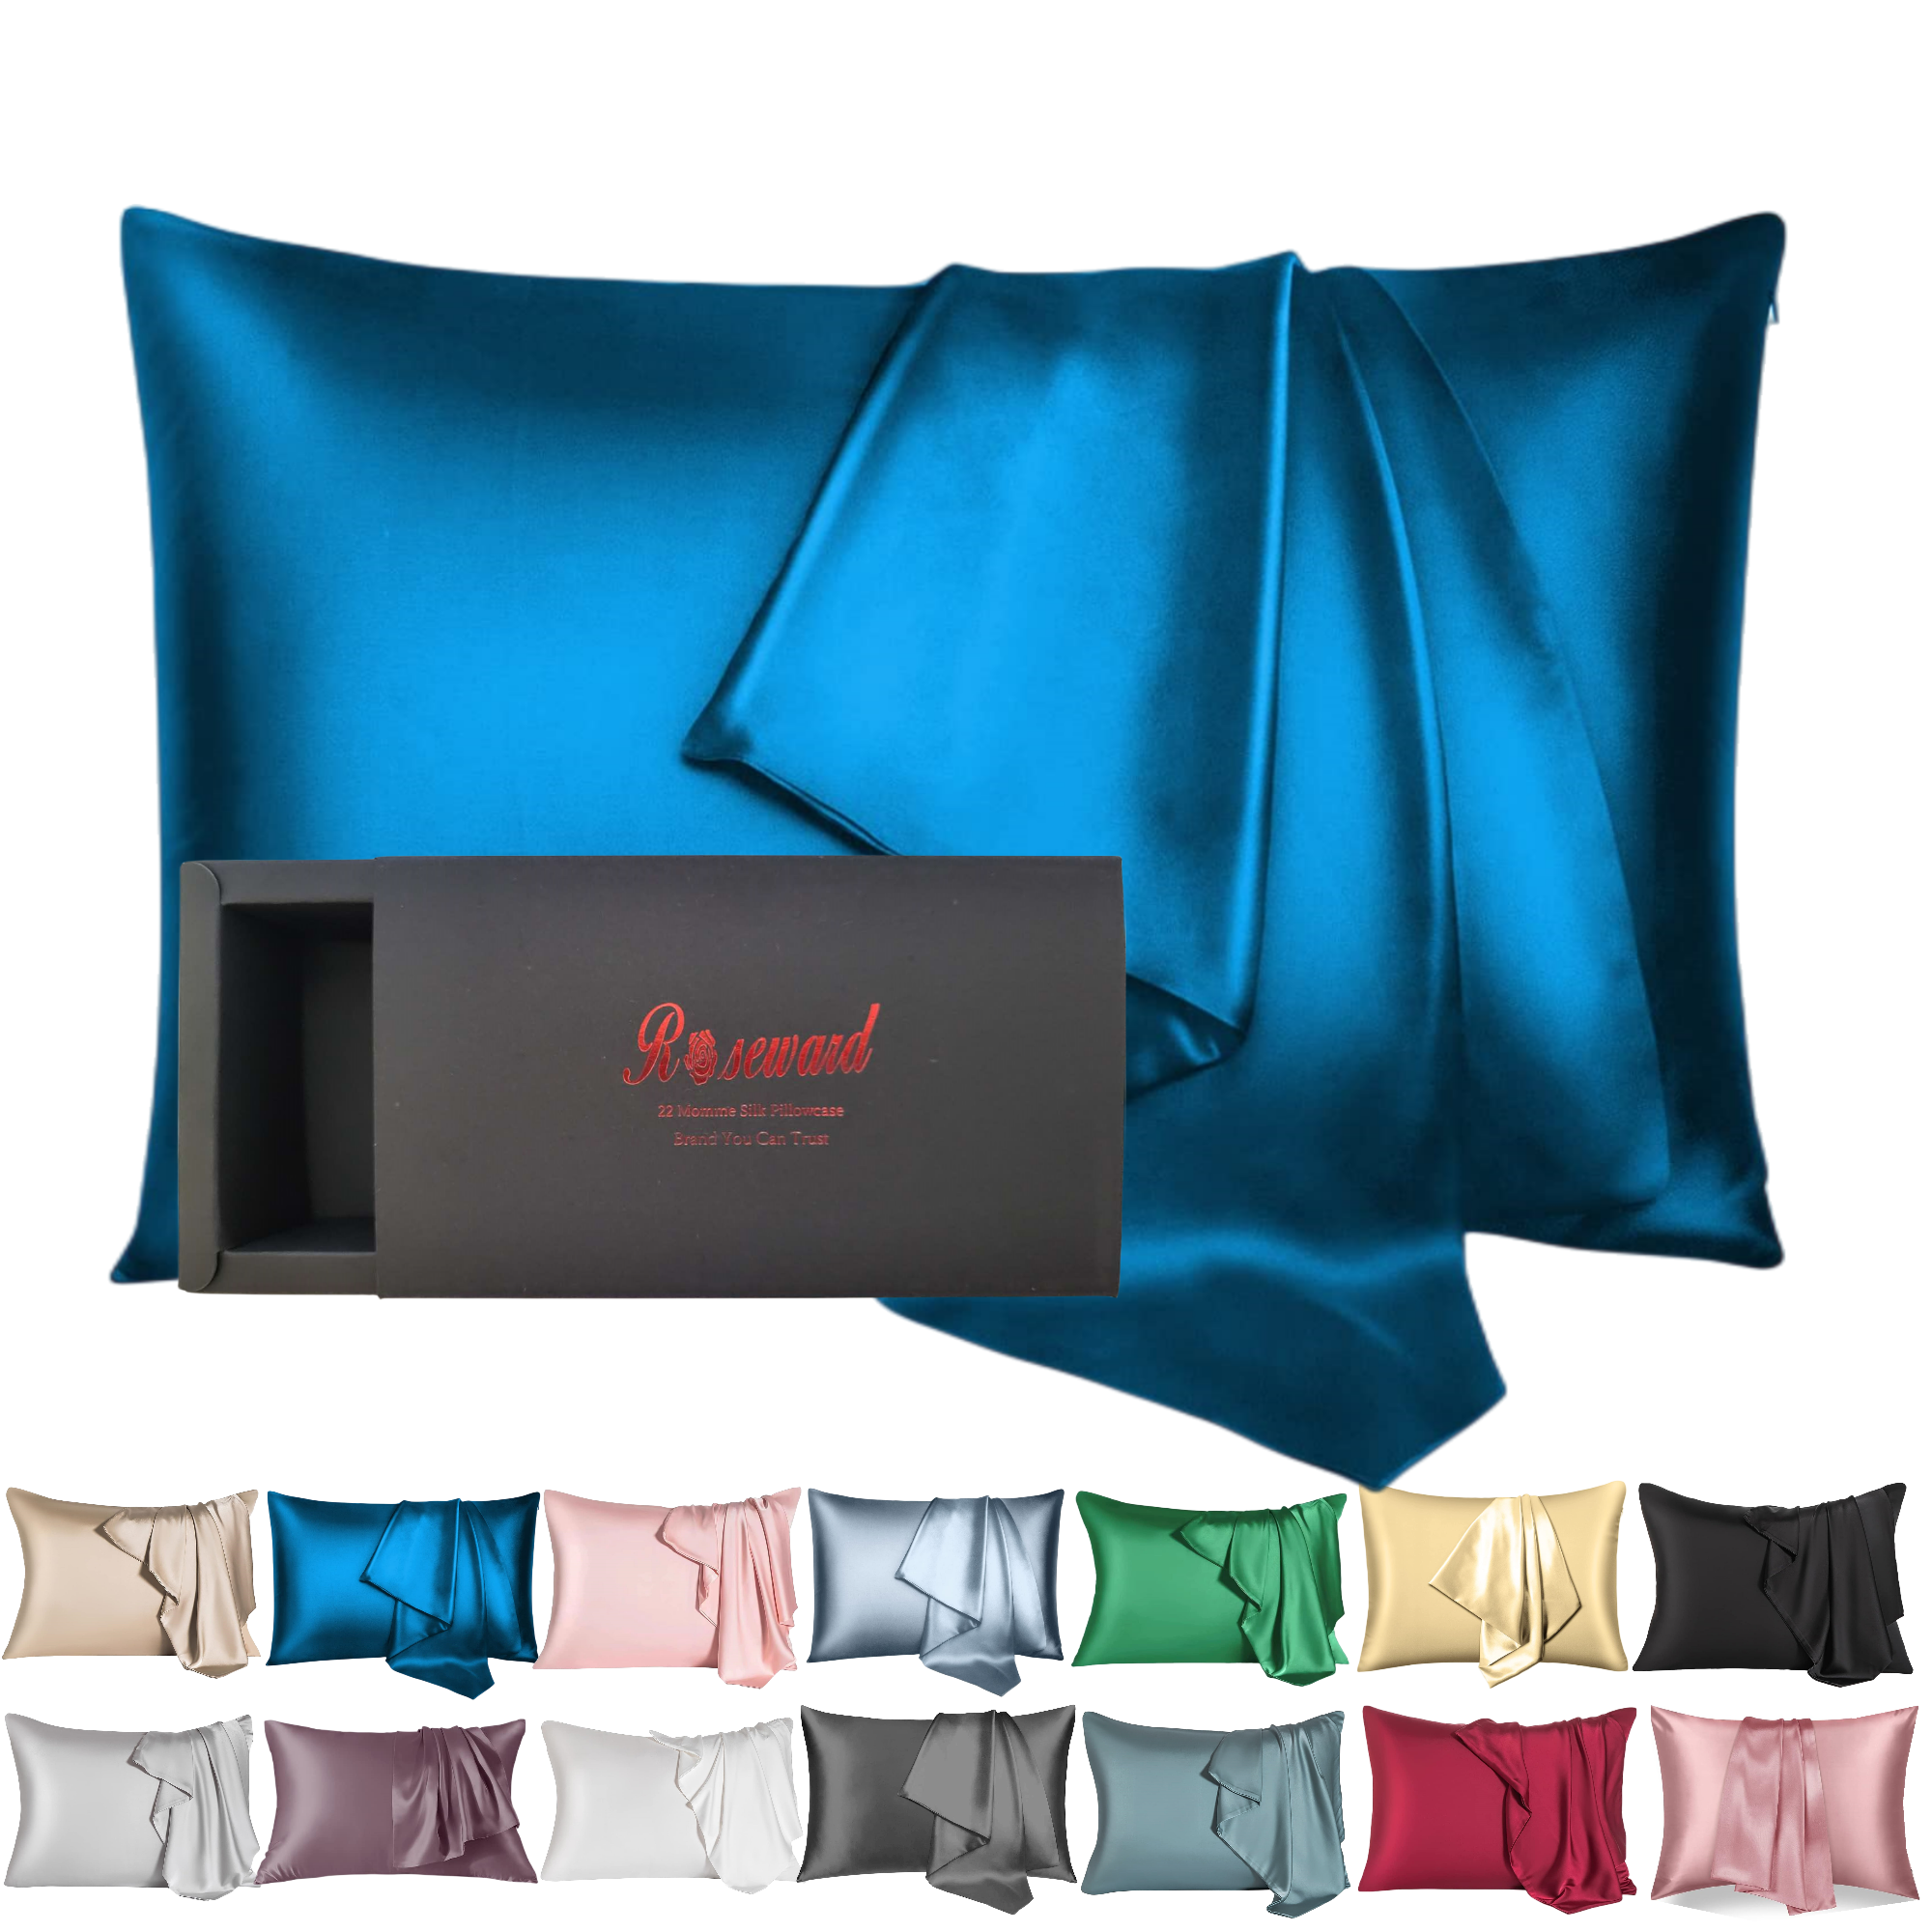 SILKY ROSÉ 100% Mulberry Silk Pillowcase(s) - Escape Aesthetics Dunstable